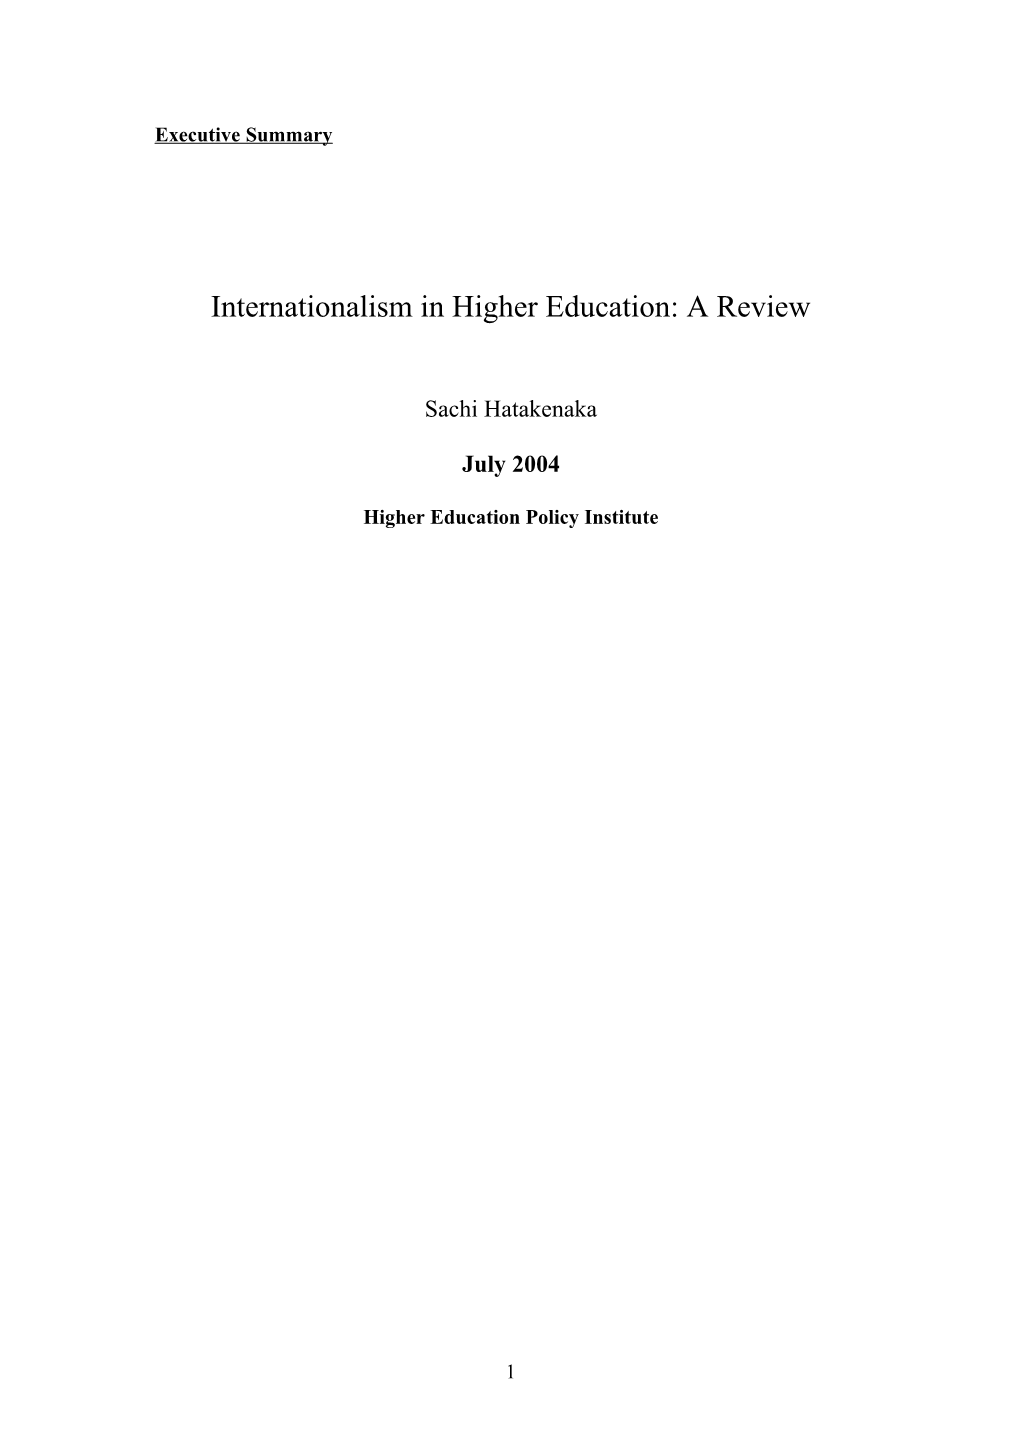 Internationalism in Higher Education